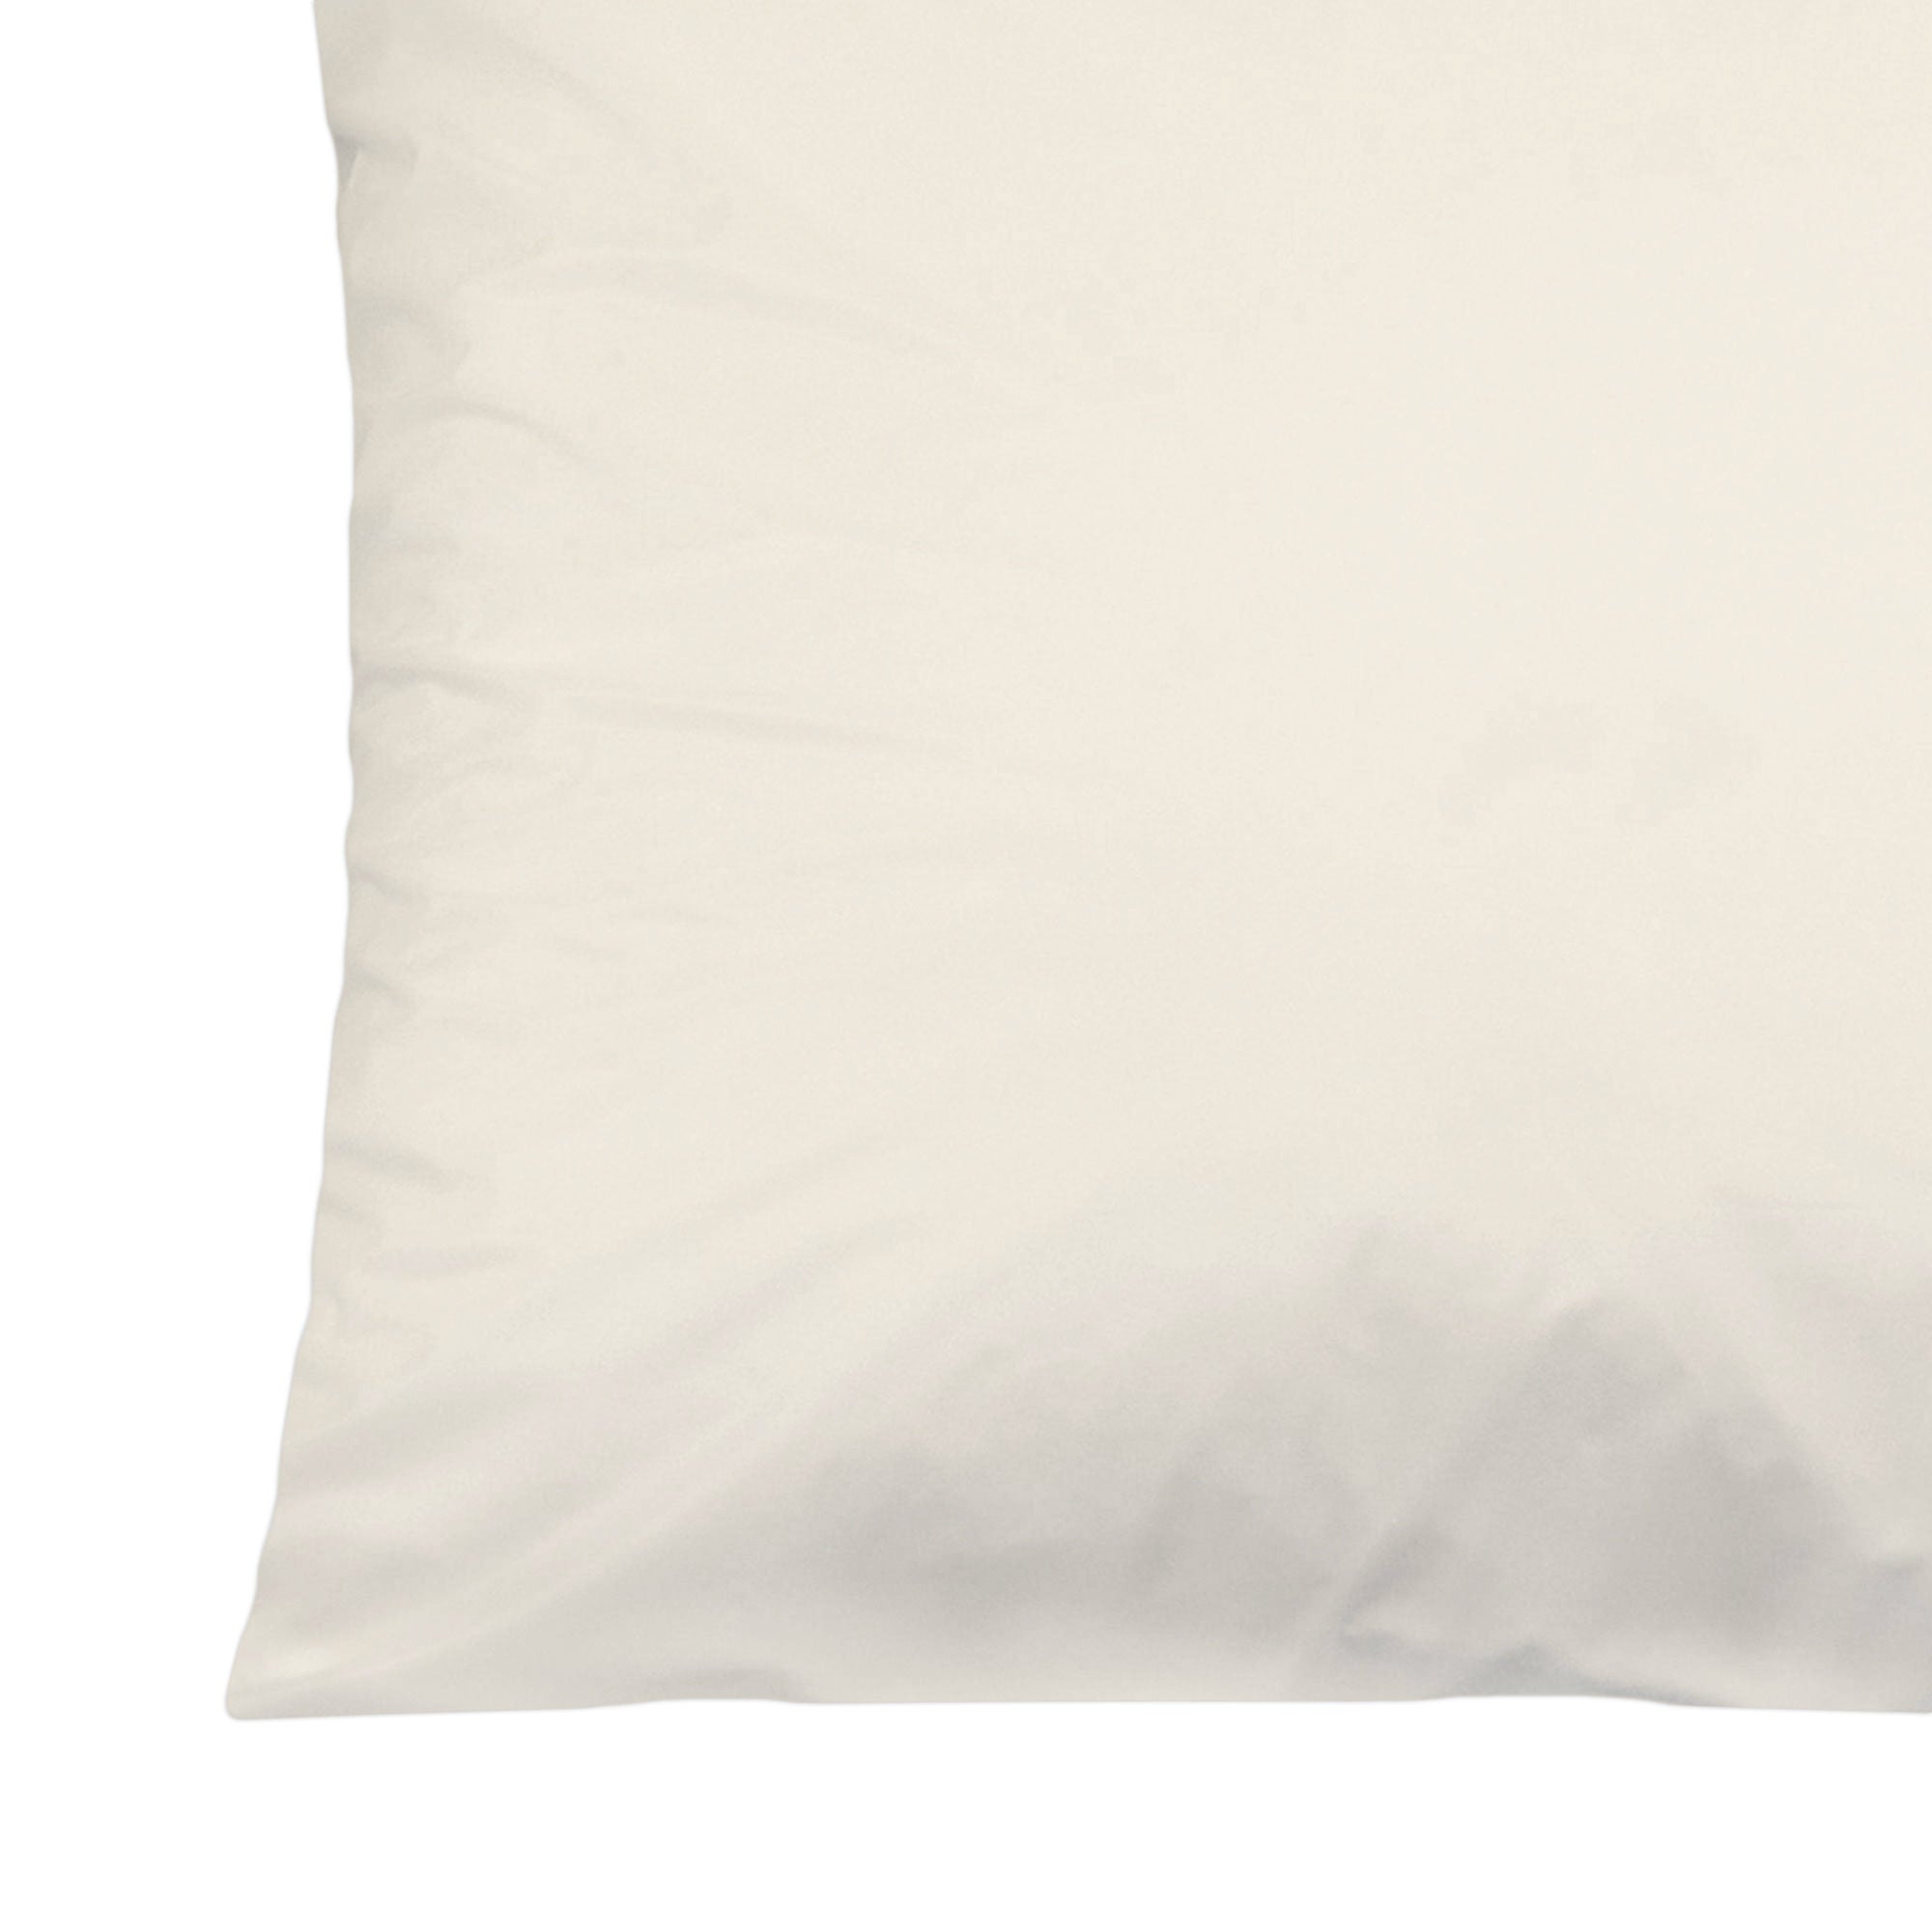 waterproof hospital pillows